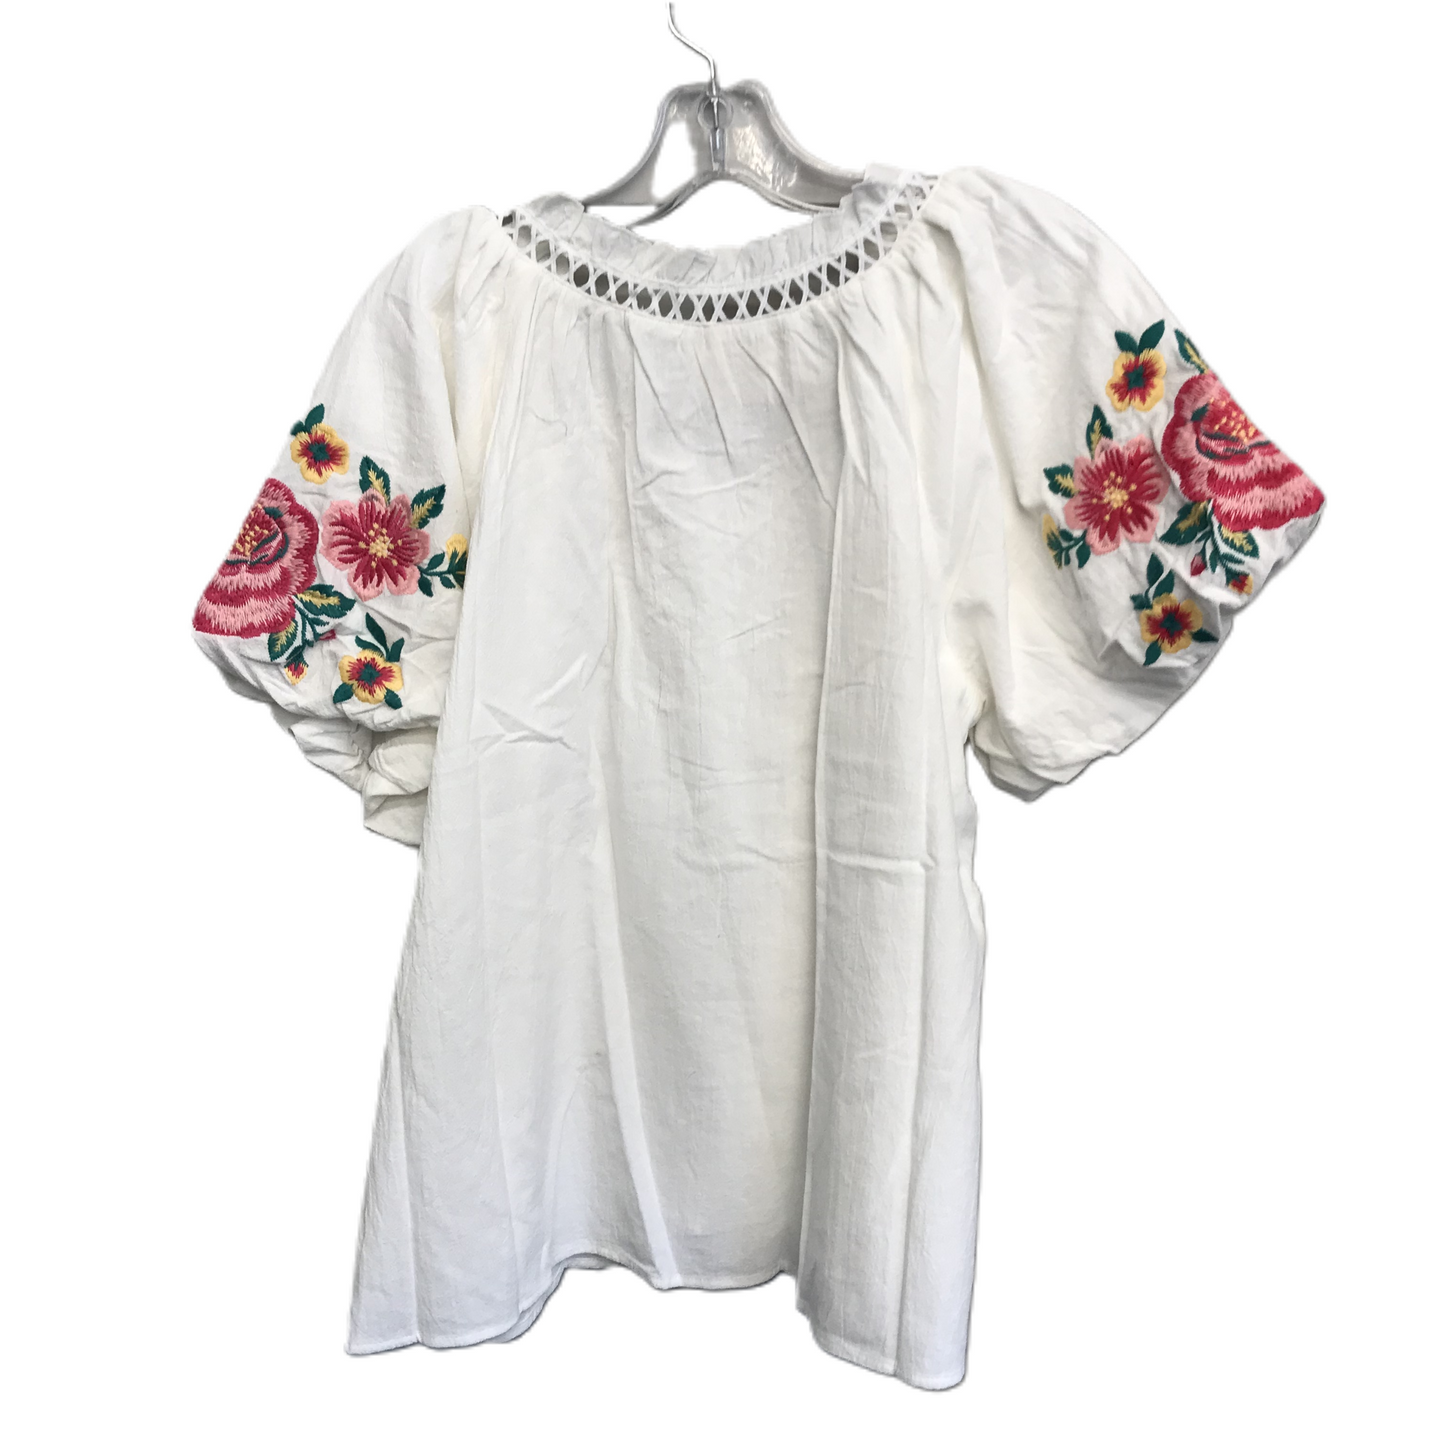 White Top Short Sleeve By Savanna Jane, Size: L